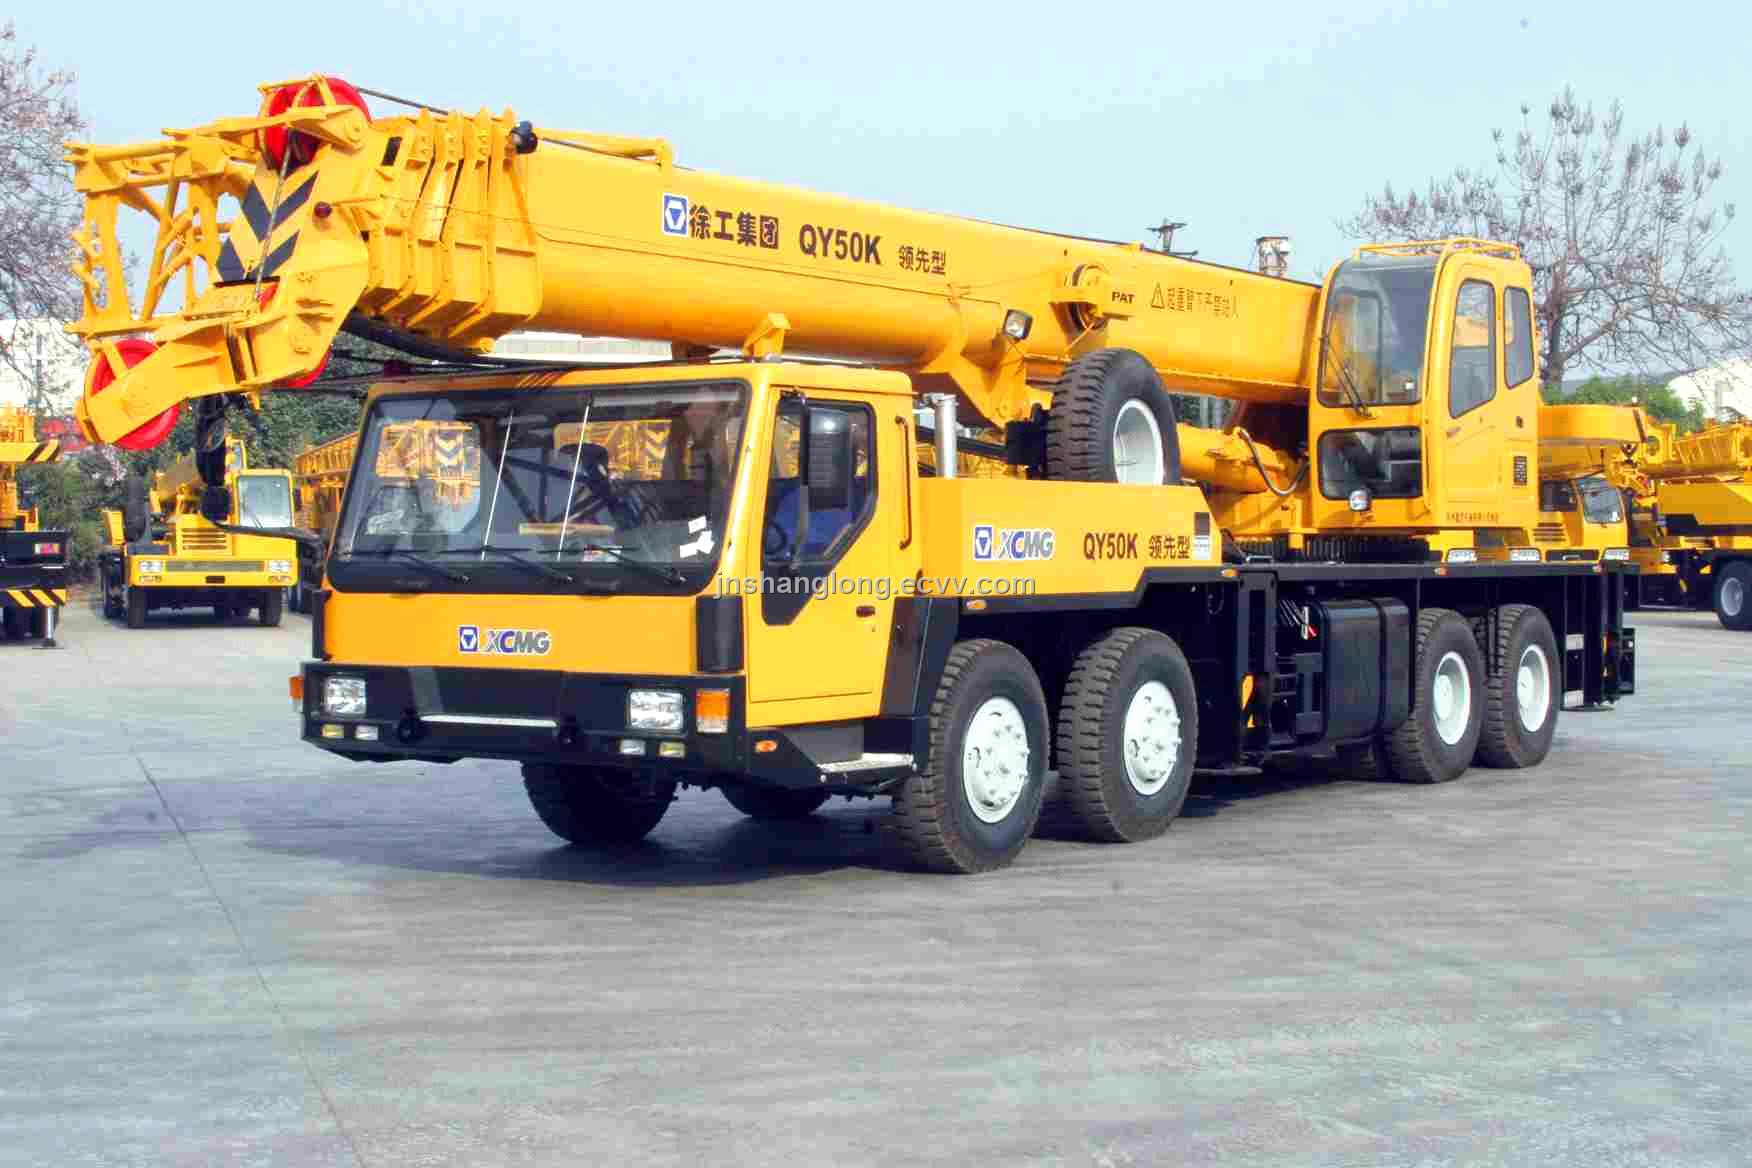 MOBILE CRANE construction truck semi tractor ariel cranes 